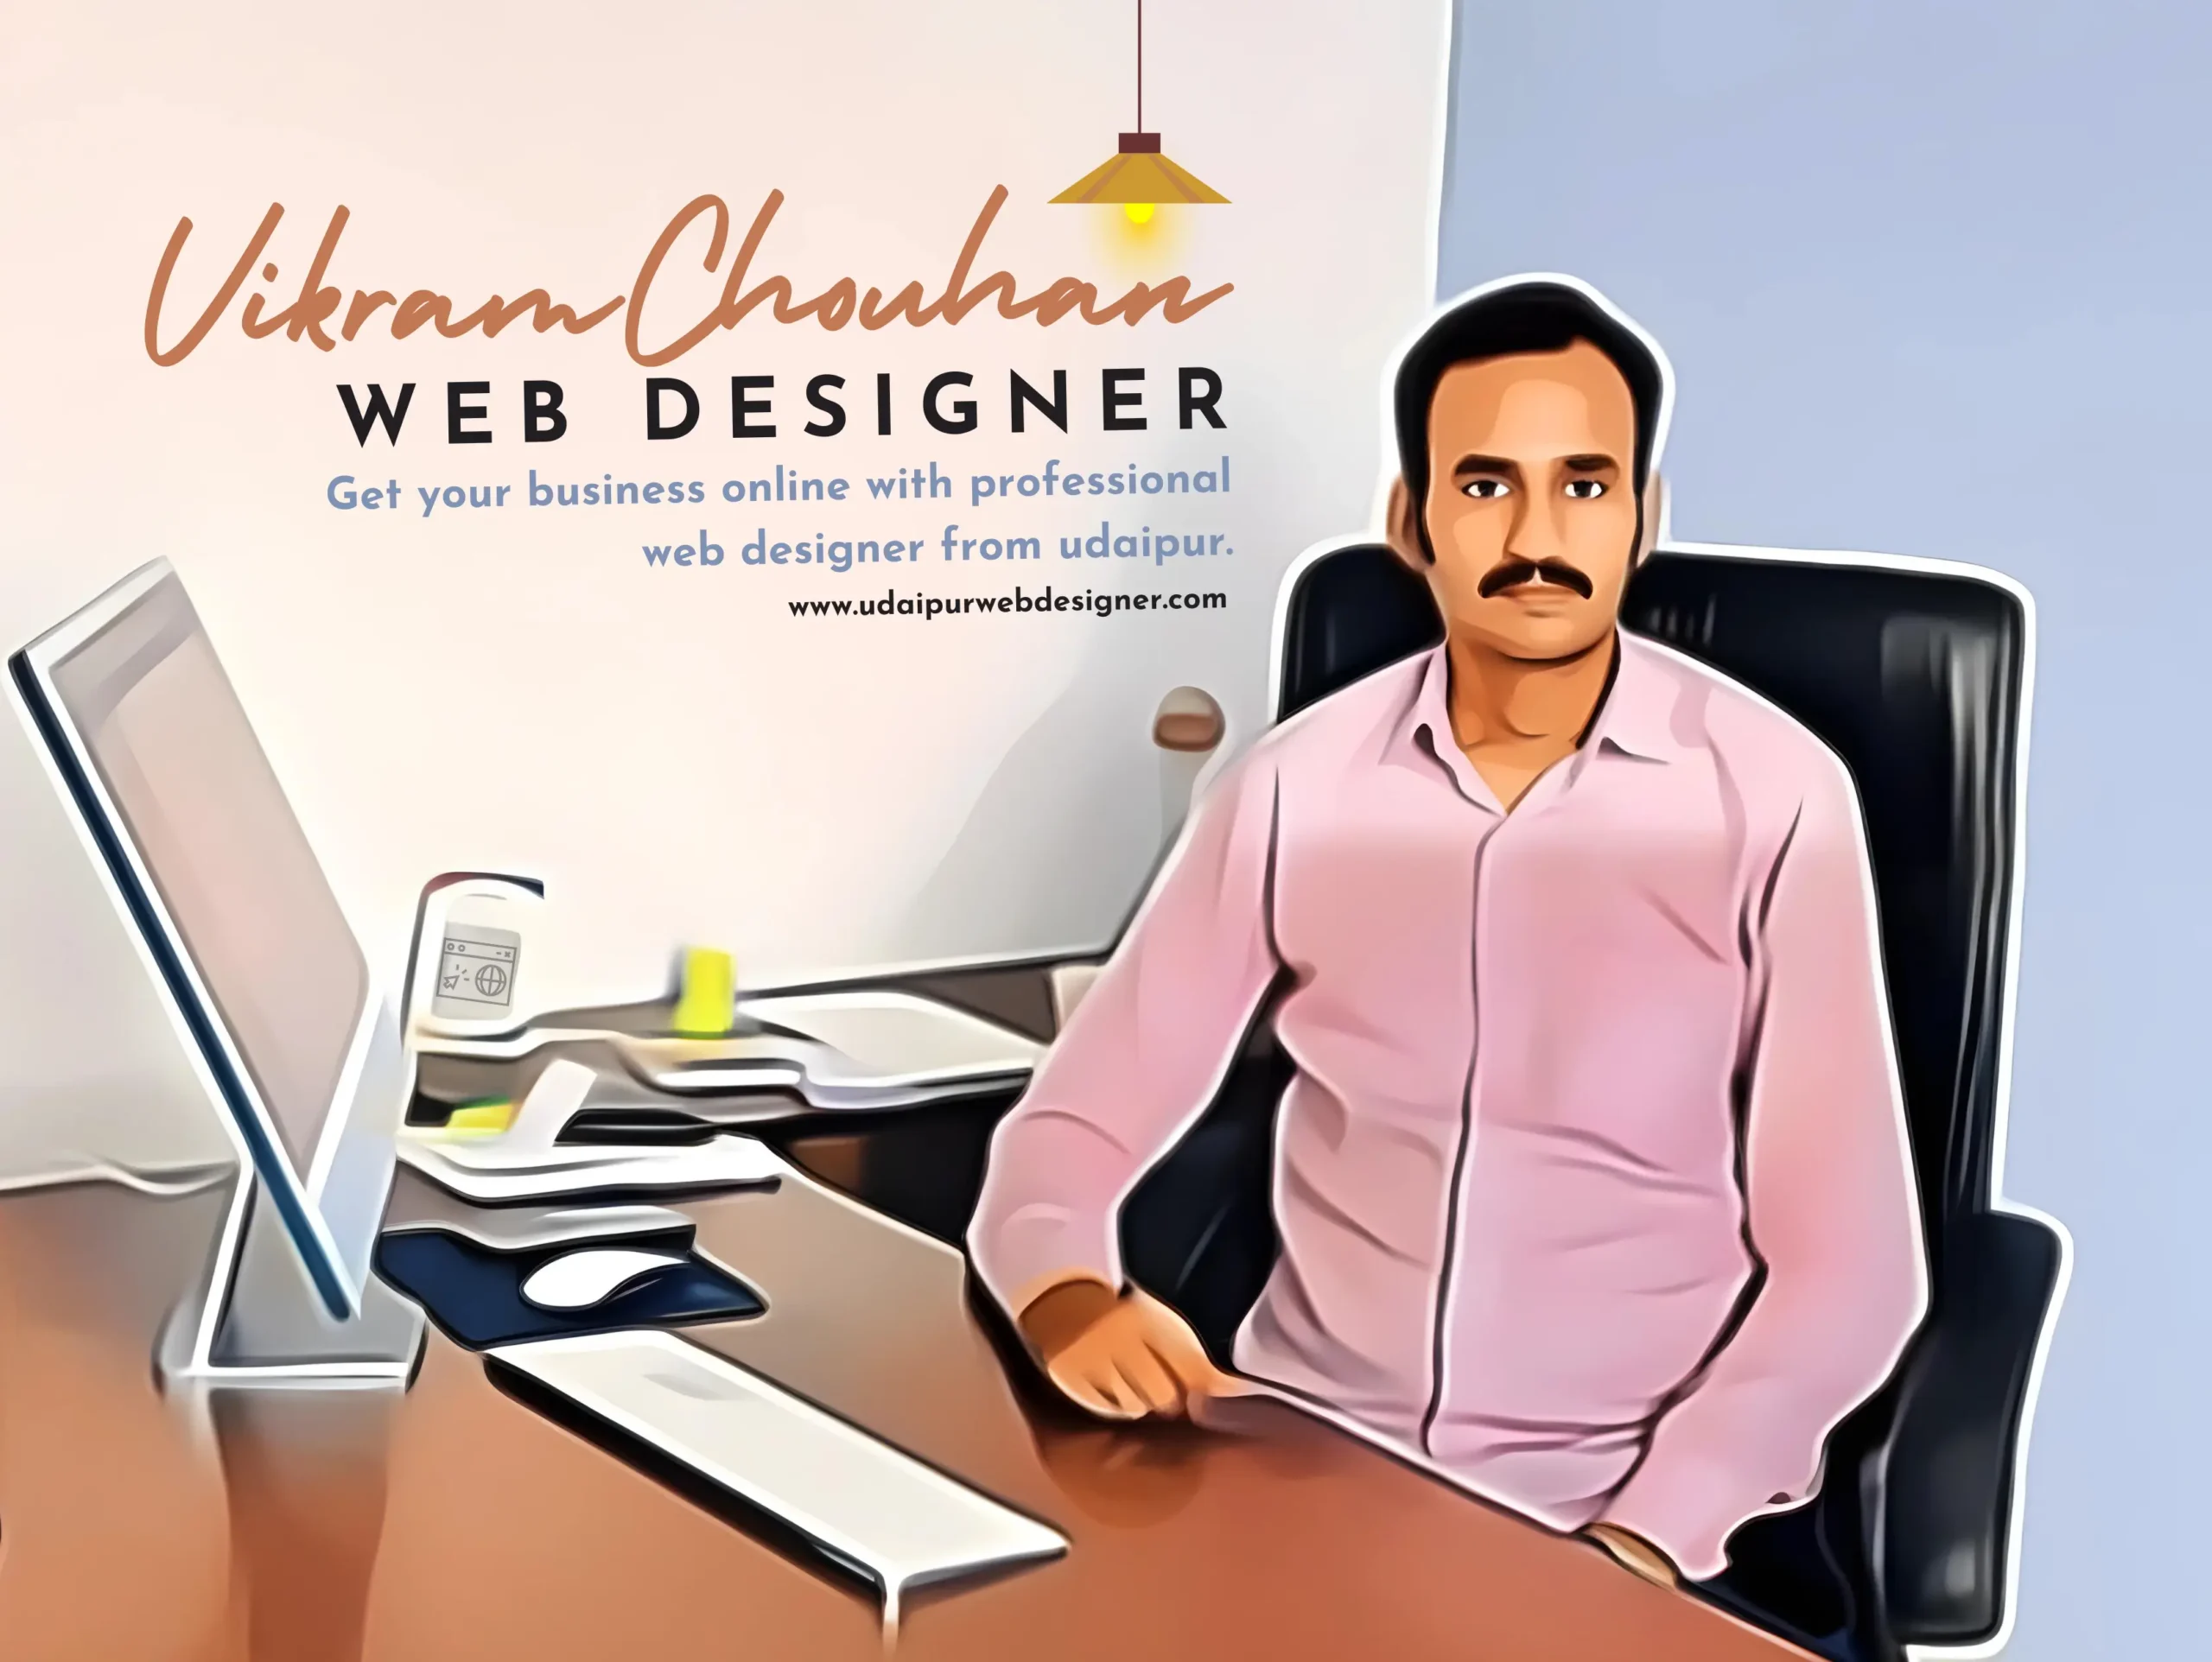 Vikram Chouhan : Pioneering Web Design and Development in Udaipur